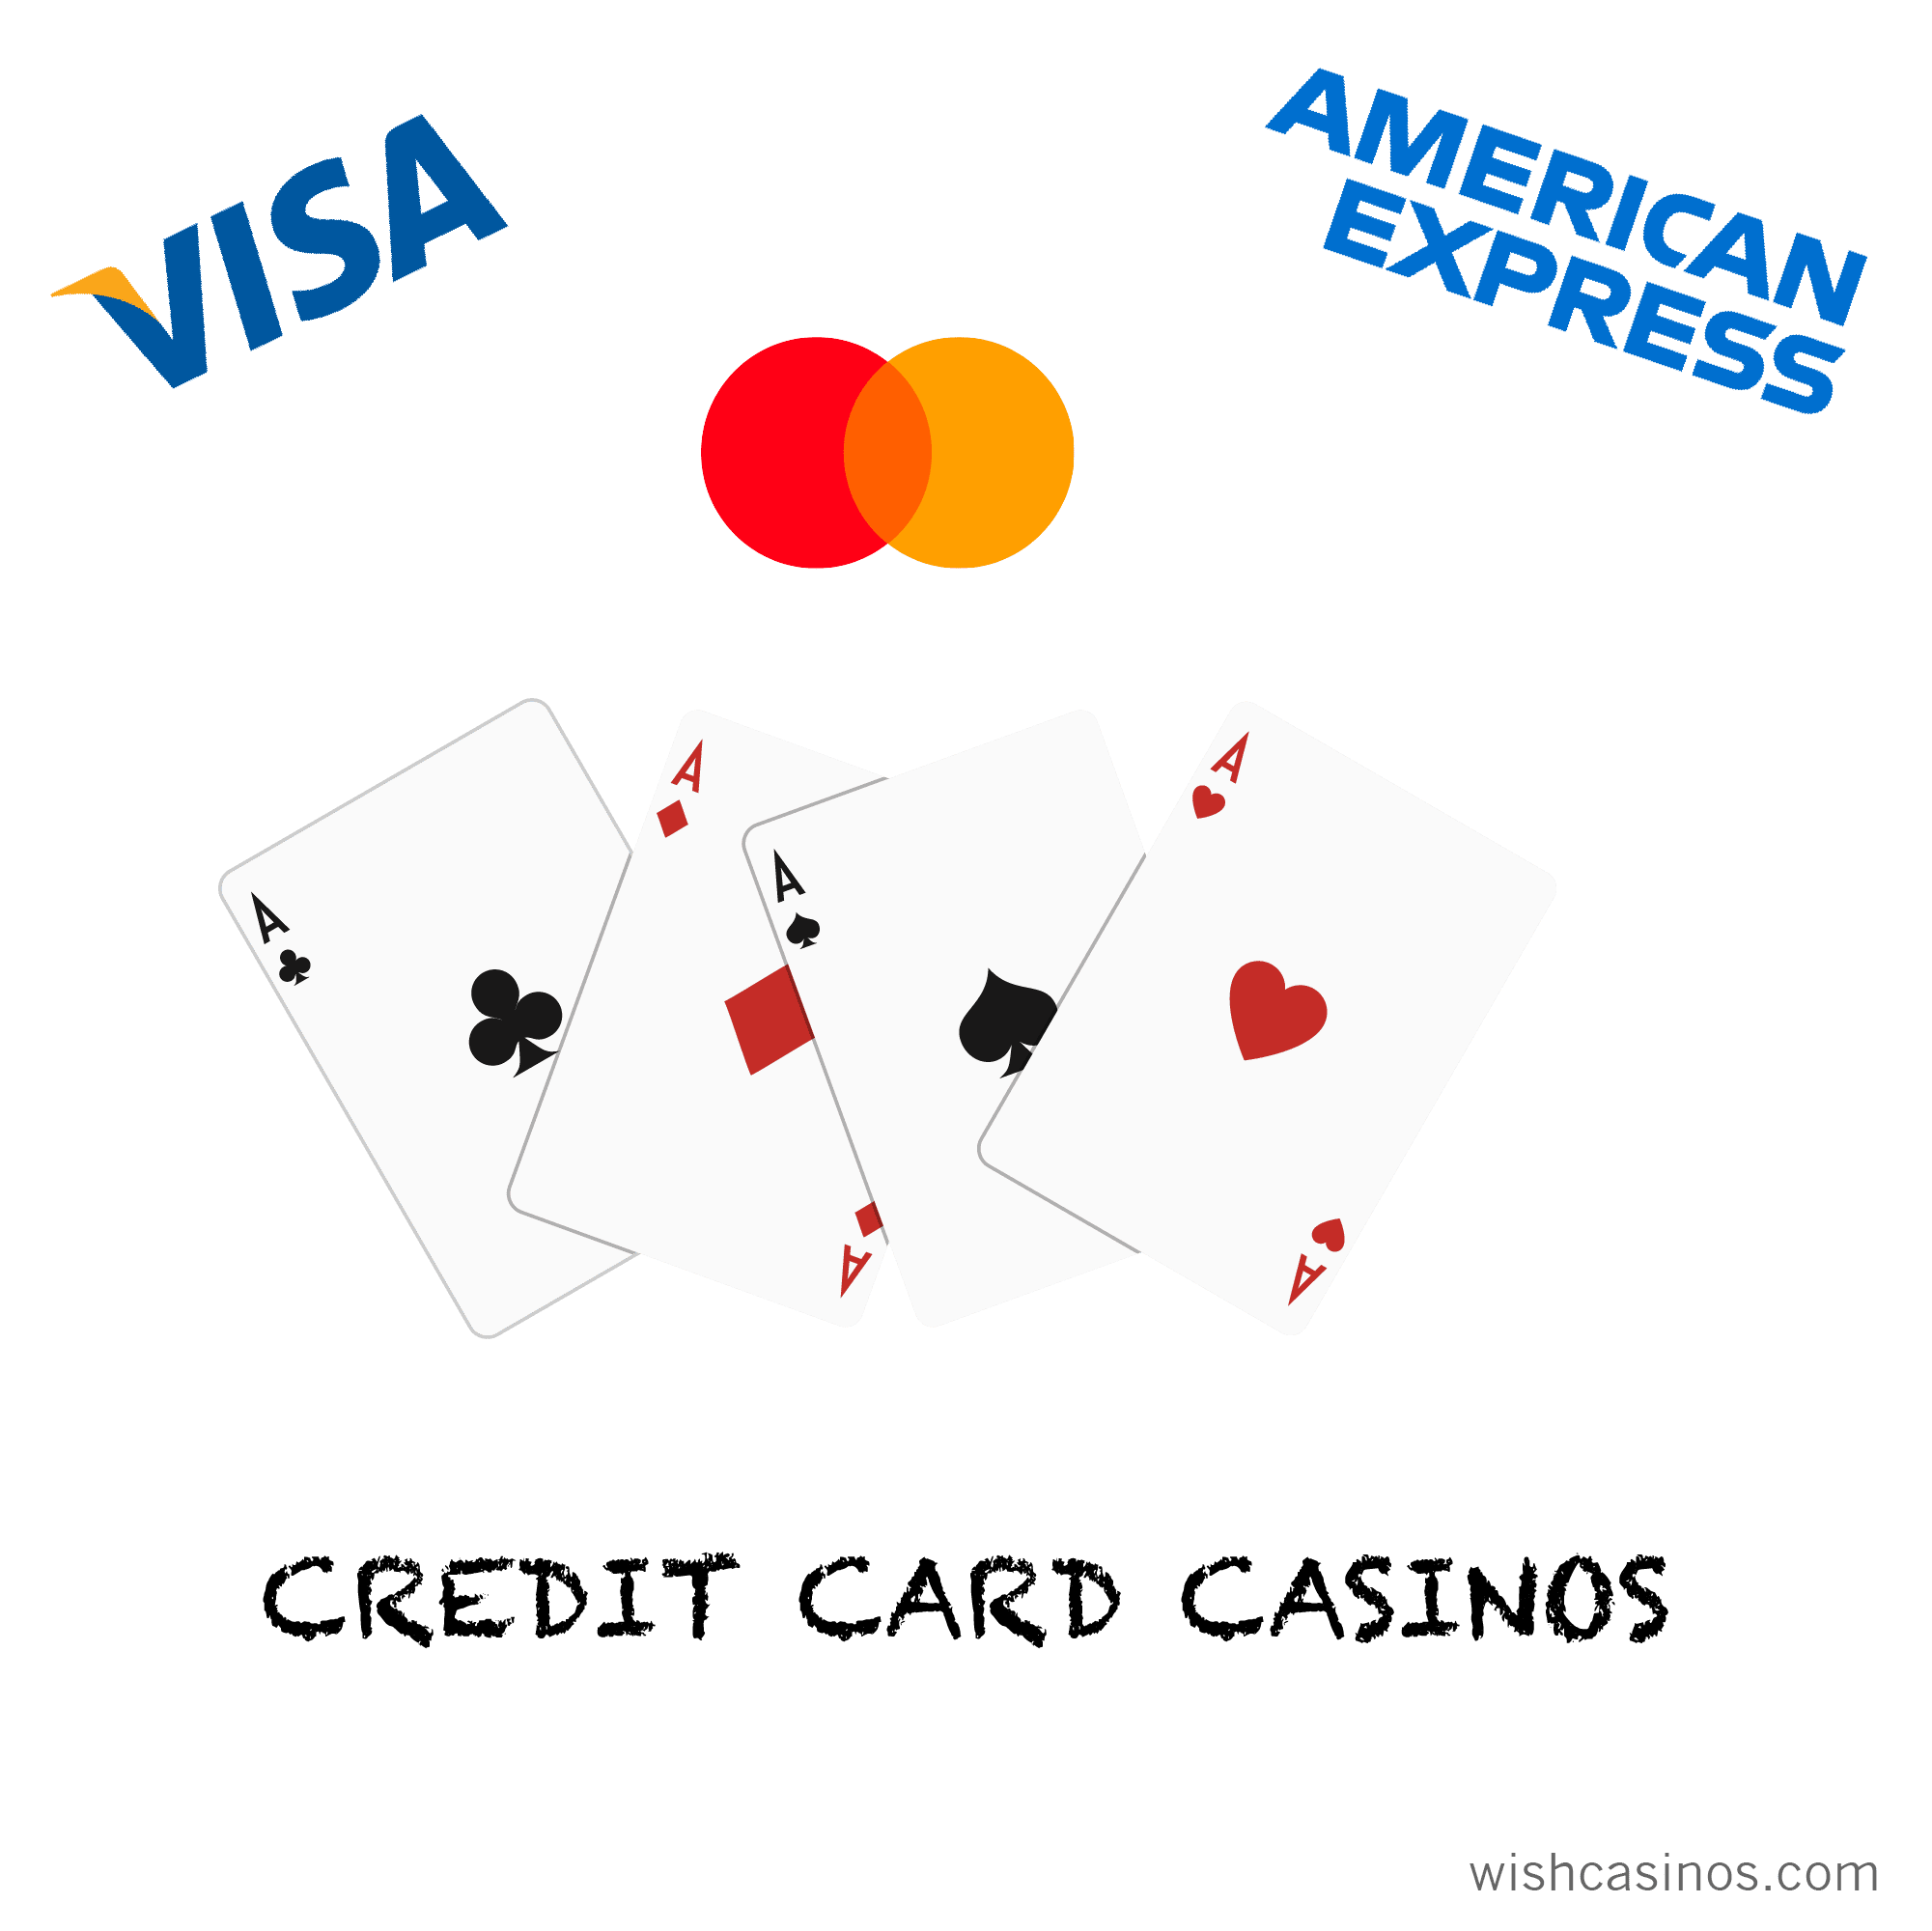 Credit Card Casinos